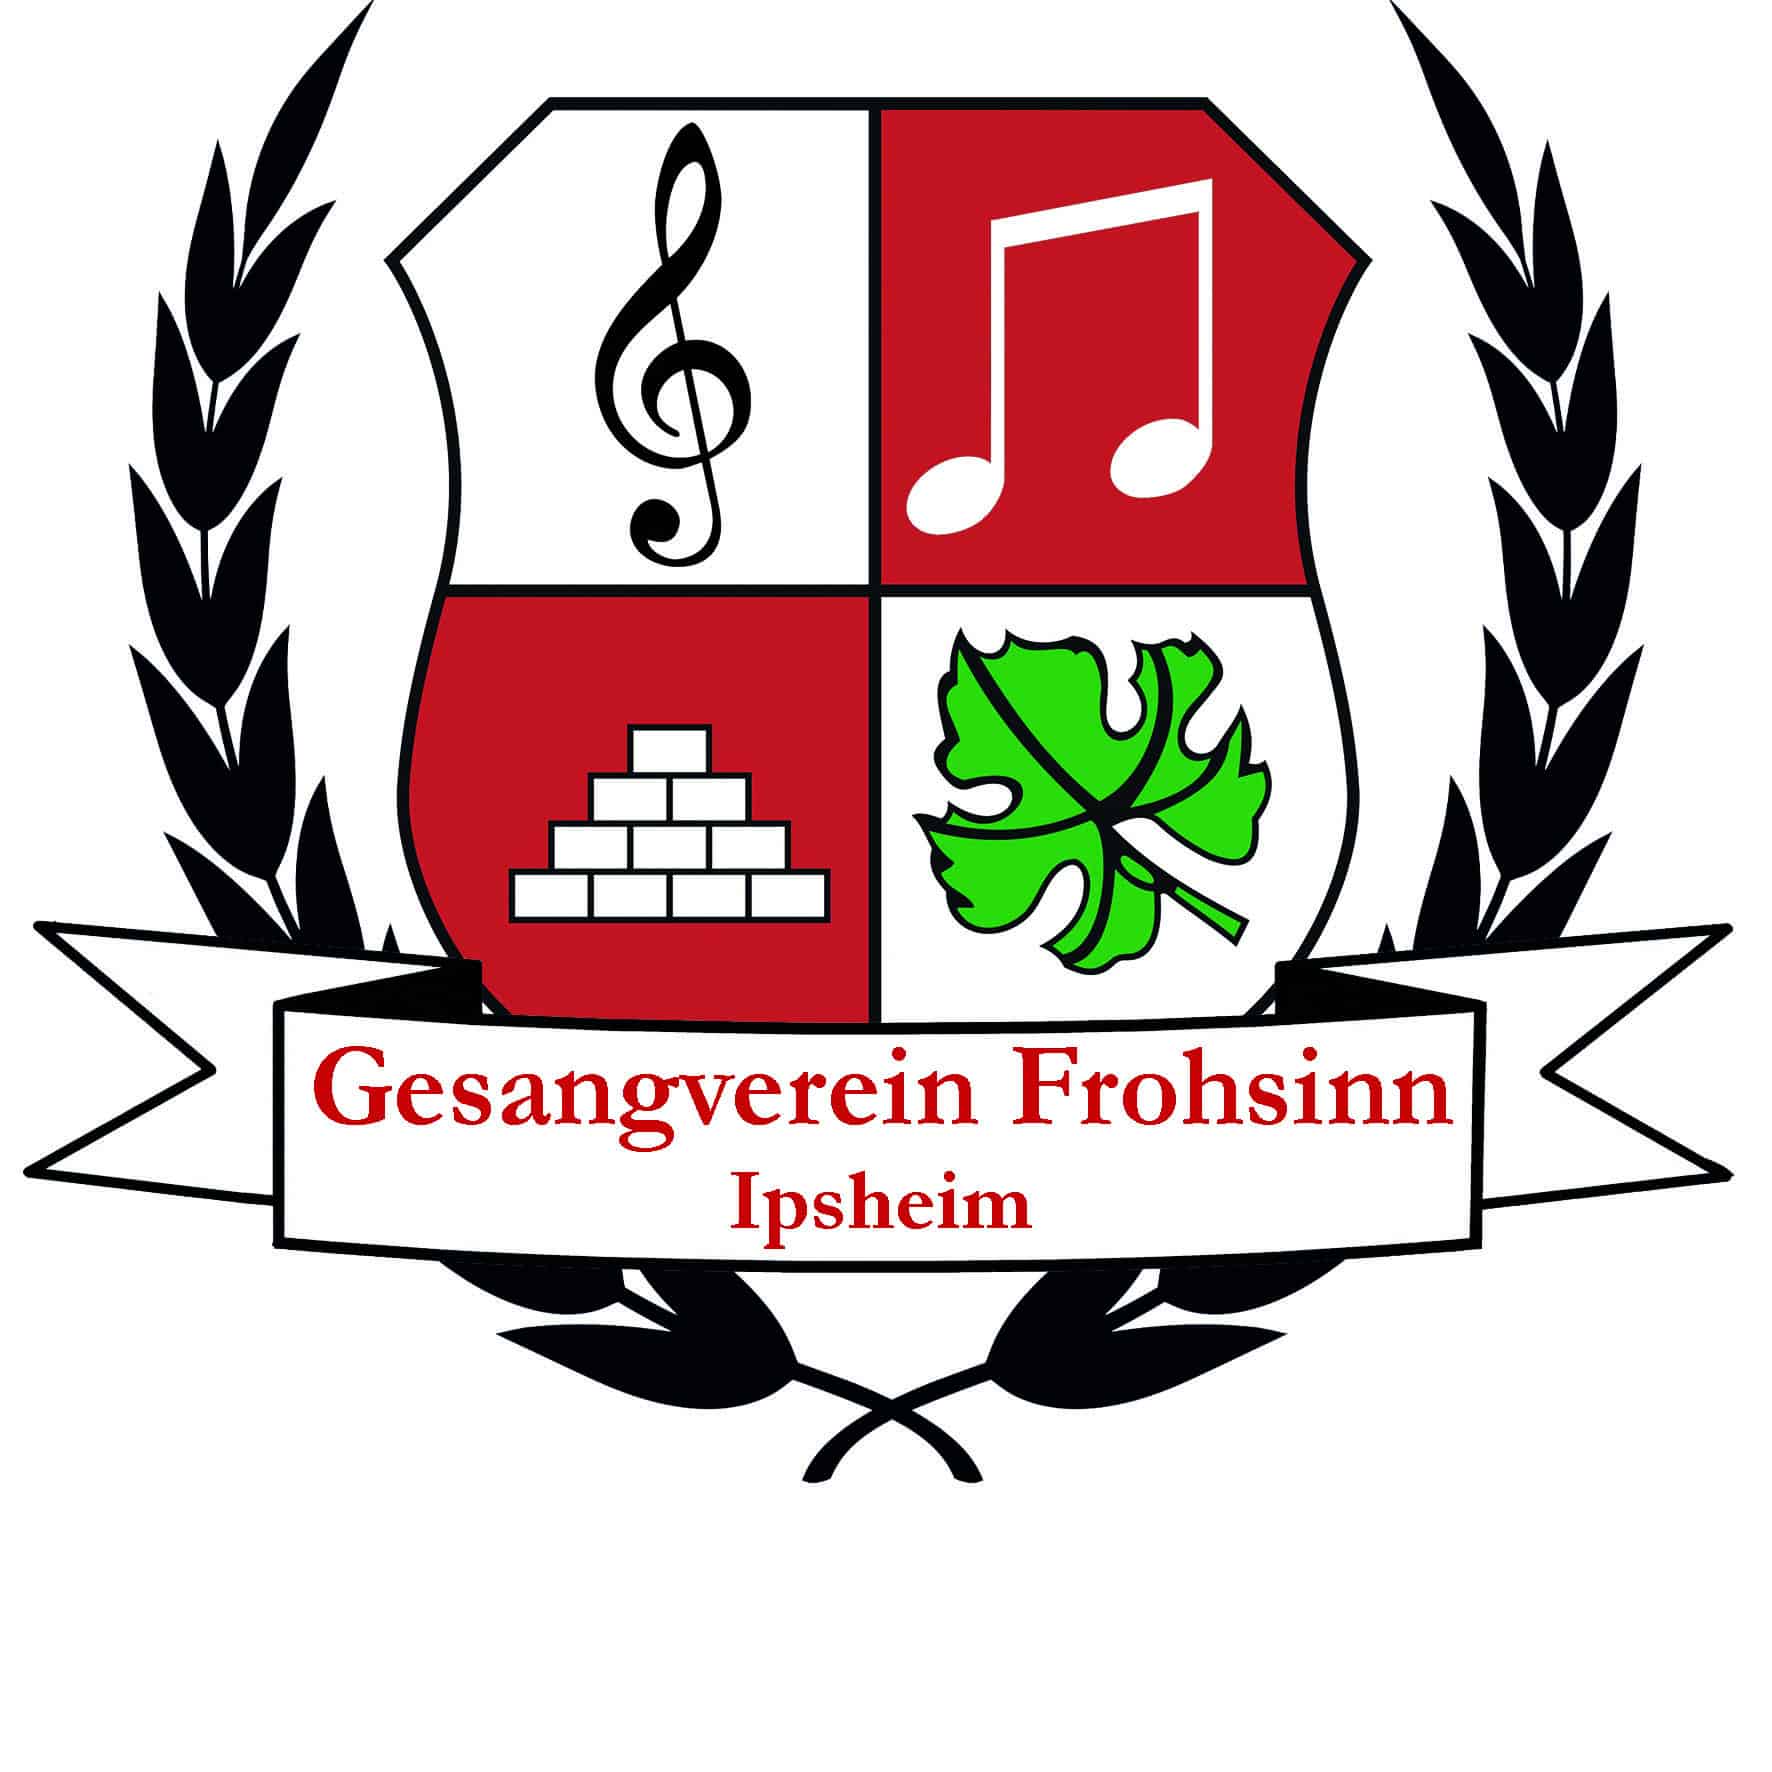 Gesangverein Frohsinn Ipsheim